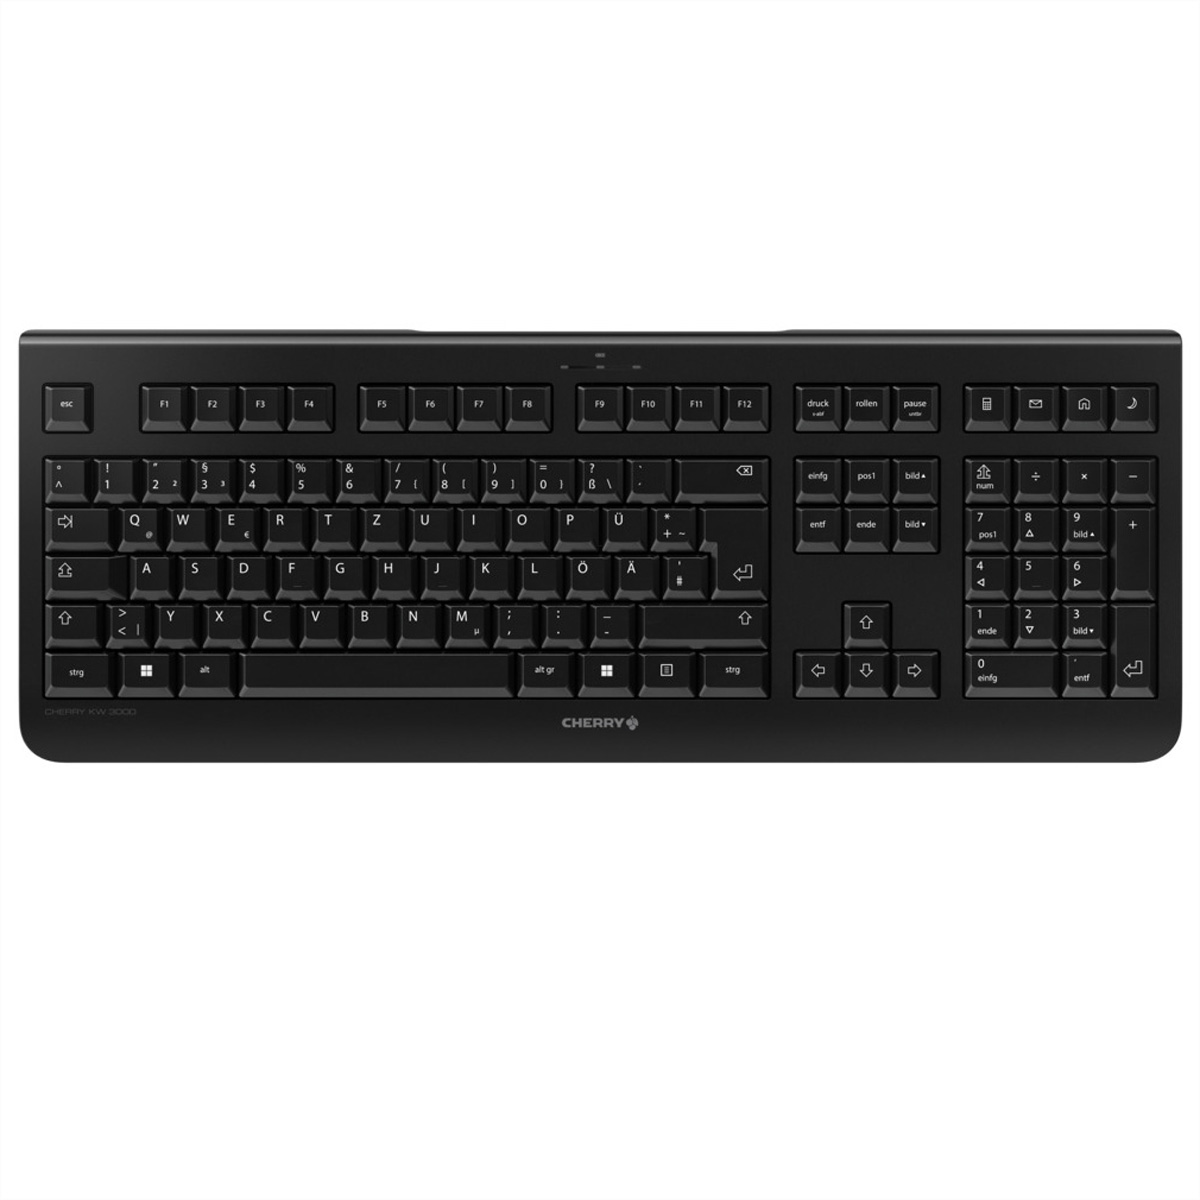 JK-3000DE-2 CHERRY KW 300 - Tastatur - geruscharm, Full-Size-Layout